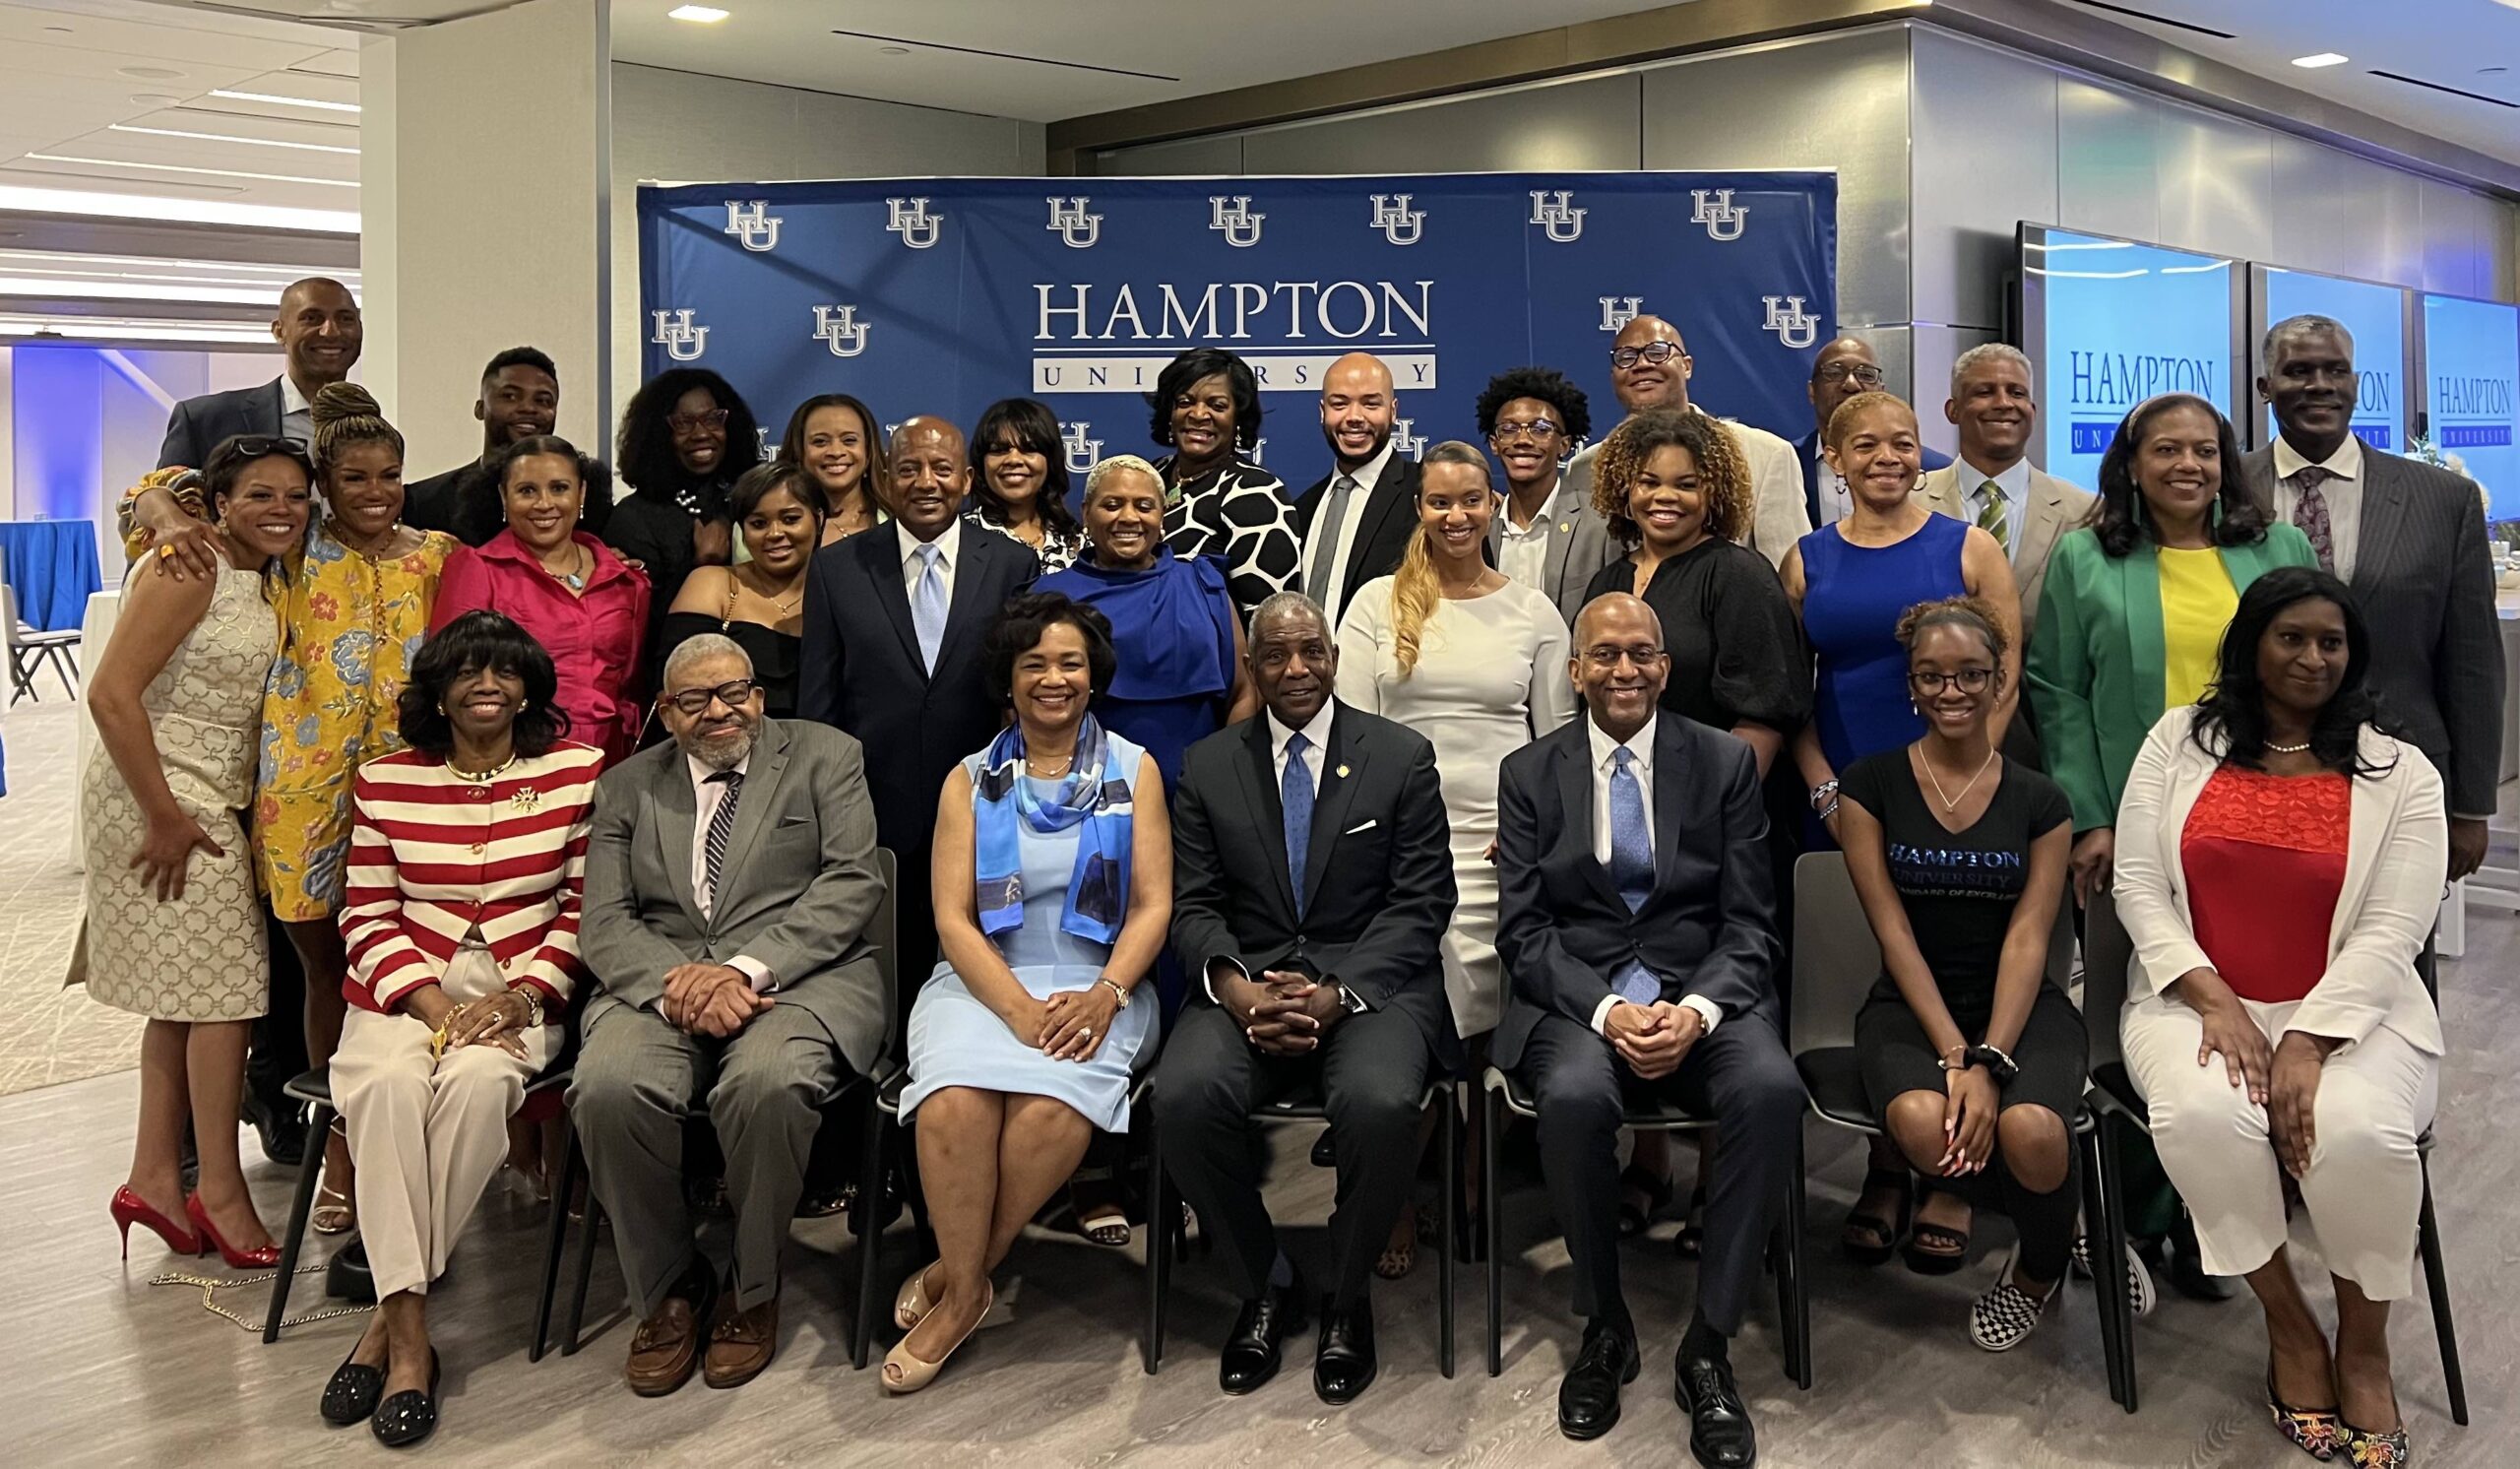 Hampton University Alumni and Friends Donate 60,000 to Character